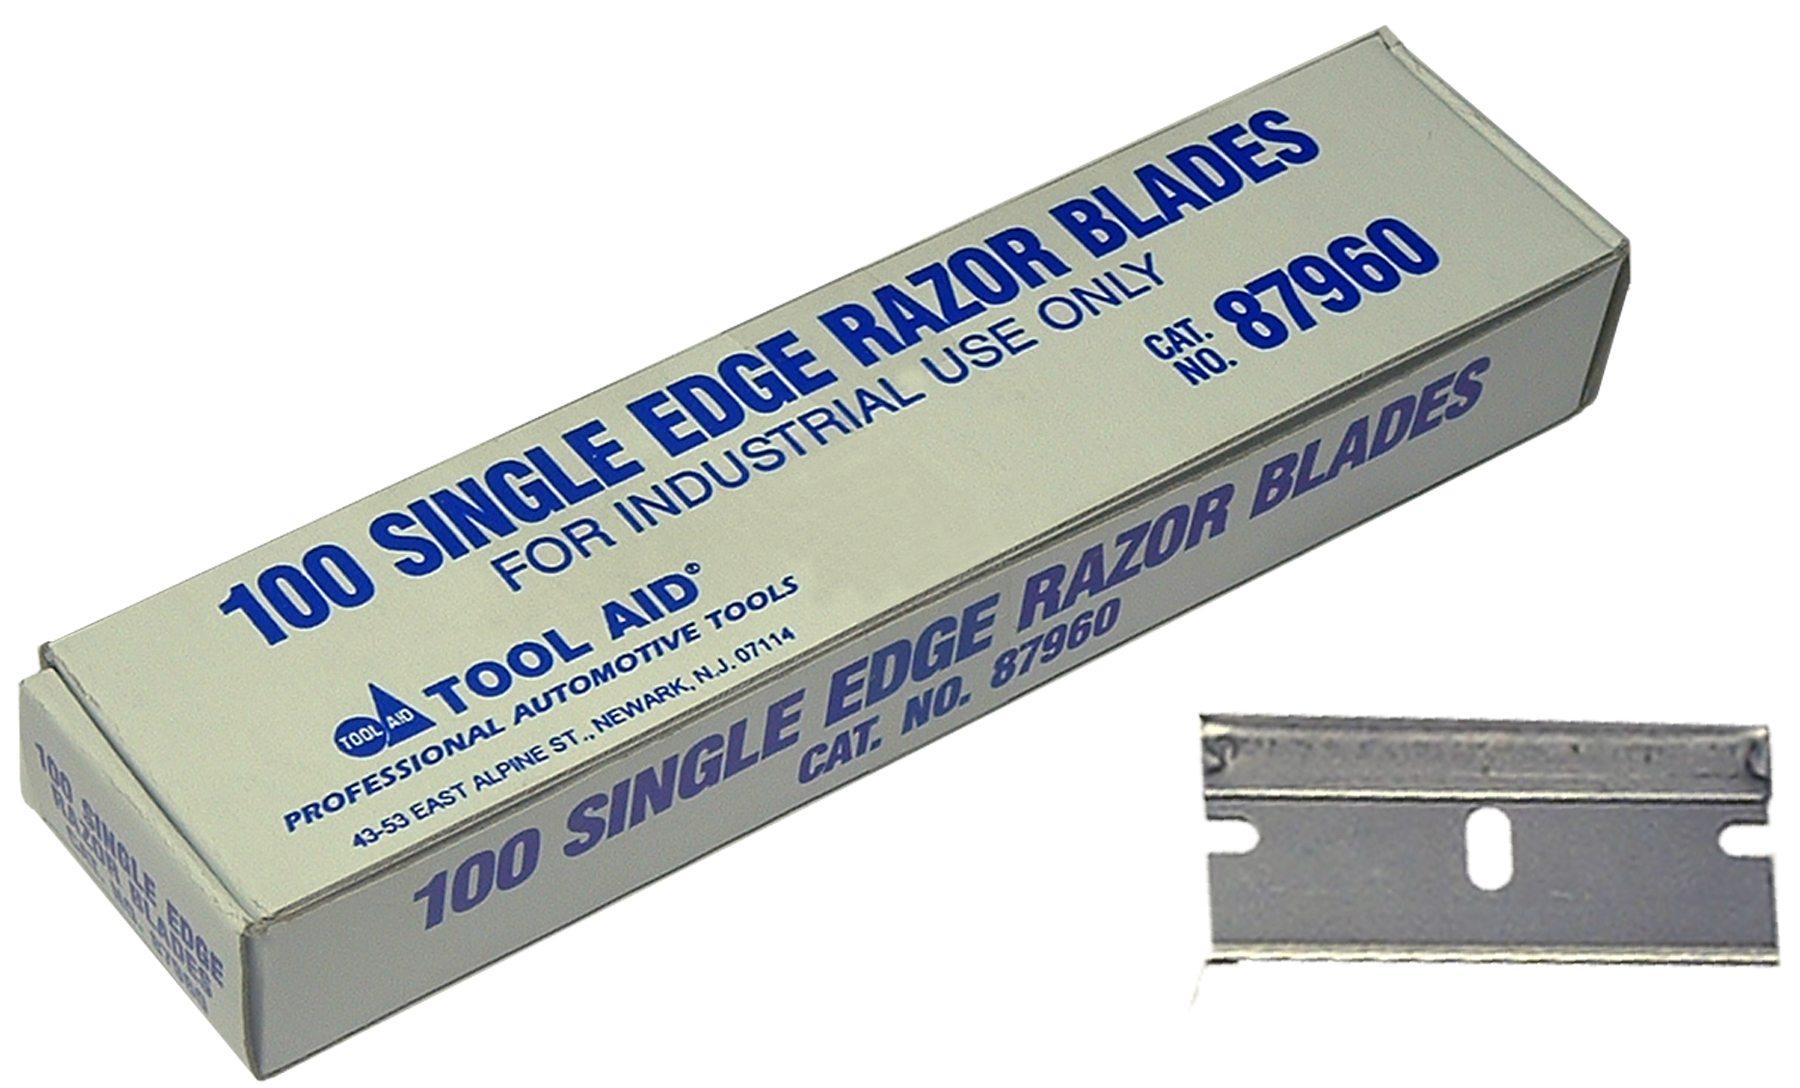 100 Single Edge Razor Blades